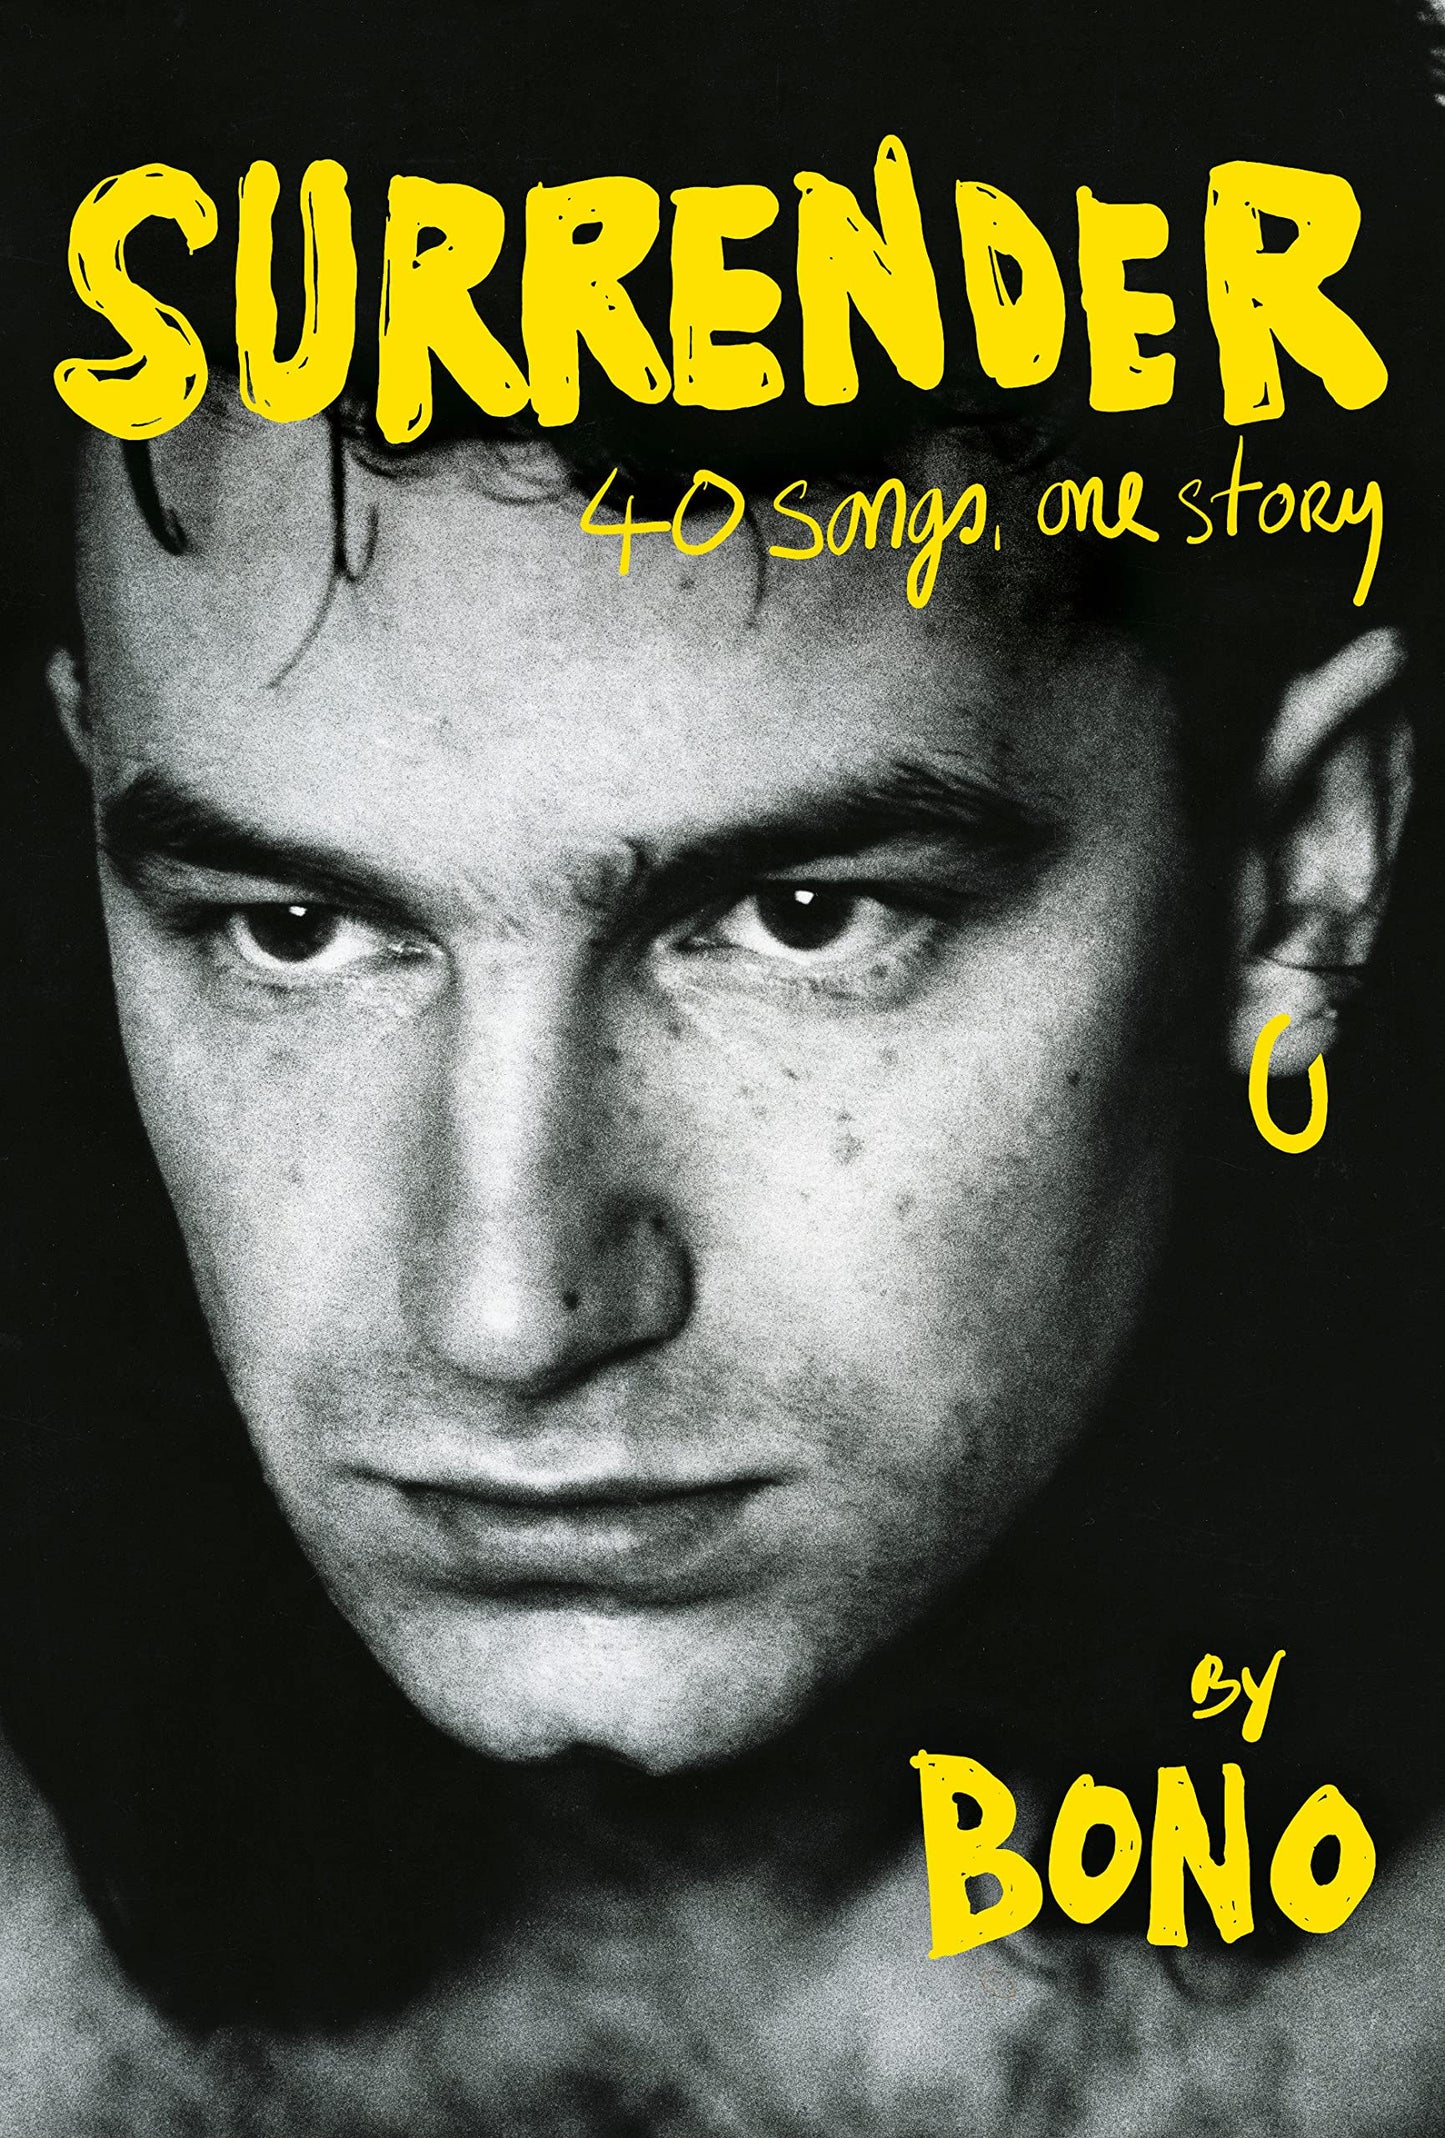 U2 - BONO - SURRENDER: 40 SONGS, ONE STORY - HARDCOVER - BOOK